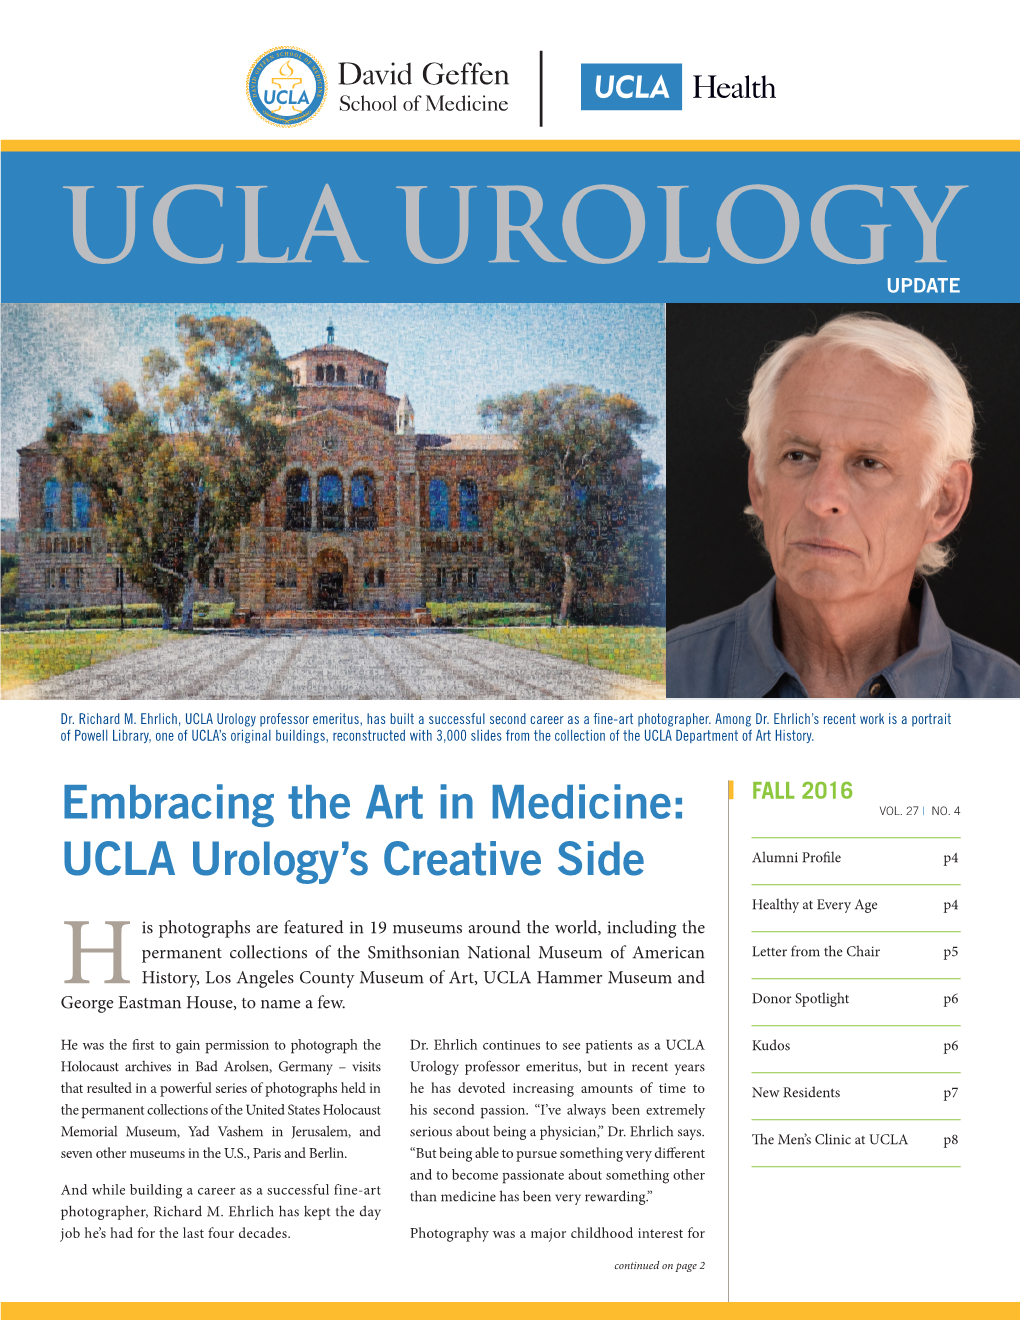 Embracing the Art of Medicine: UCLA Urology's Creative Side